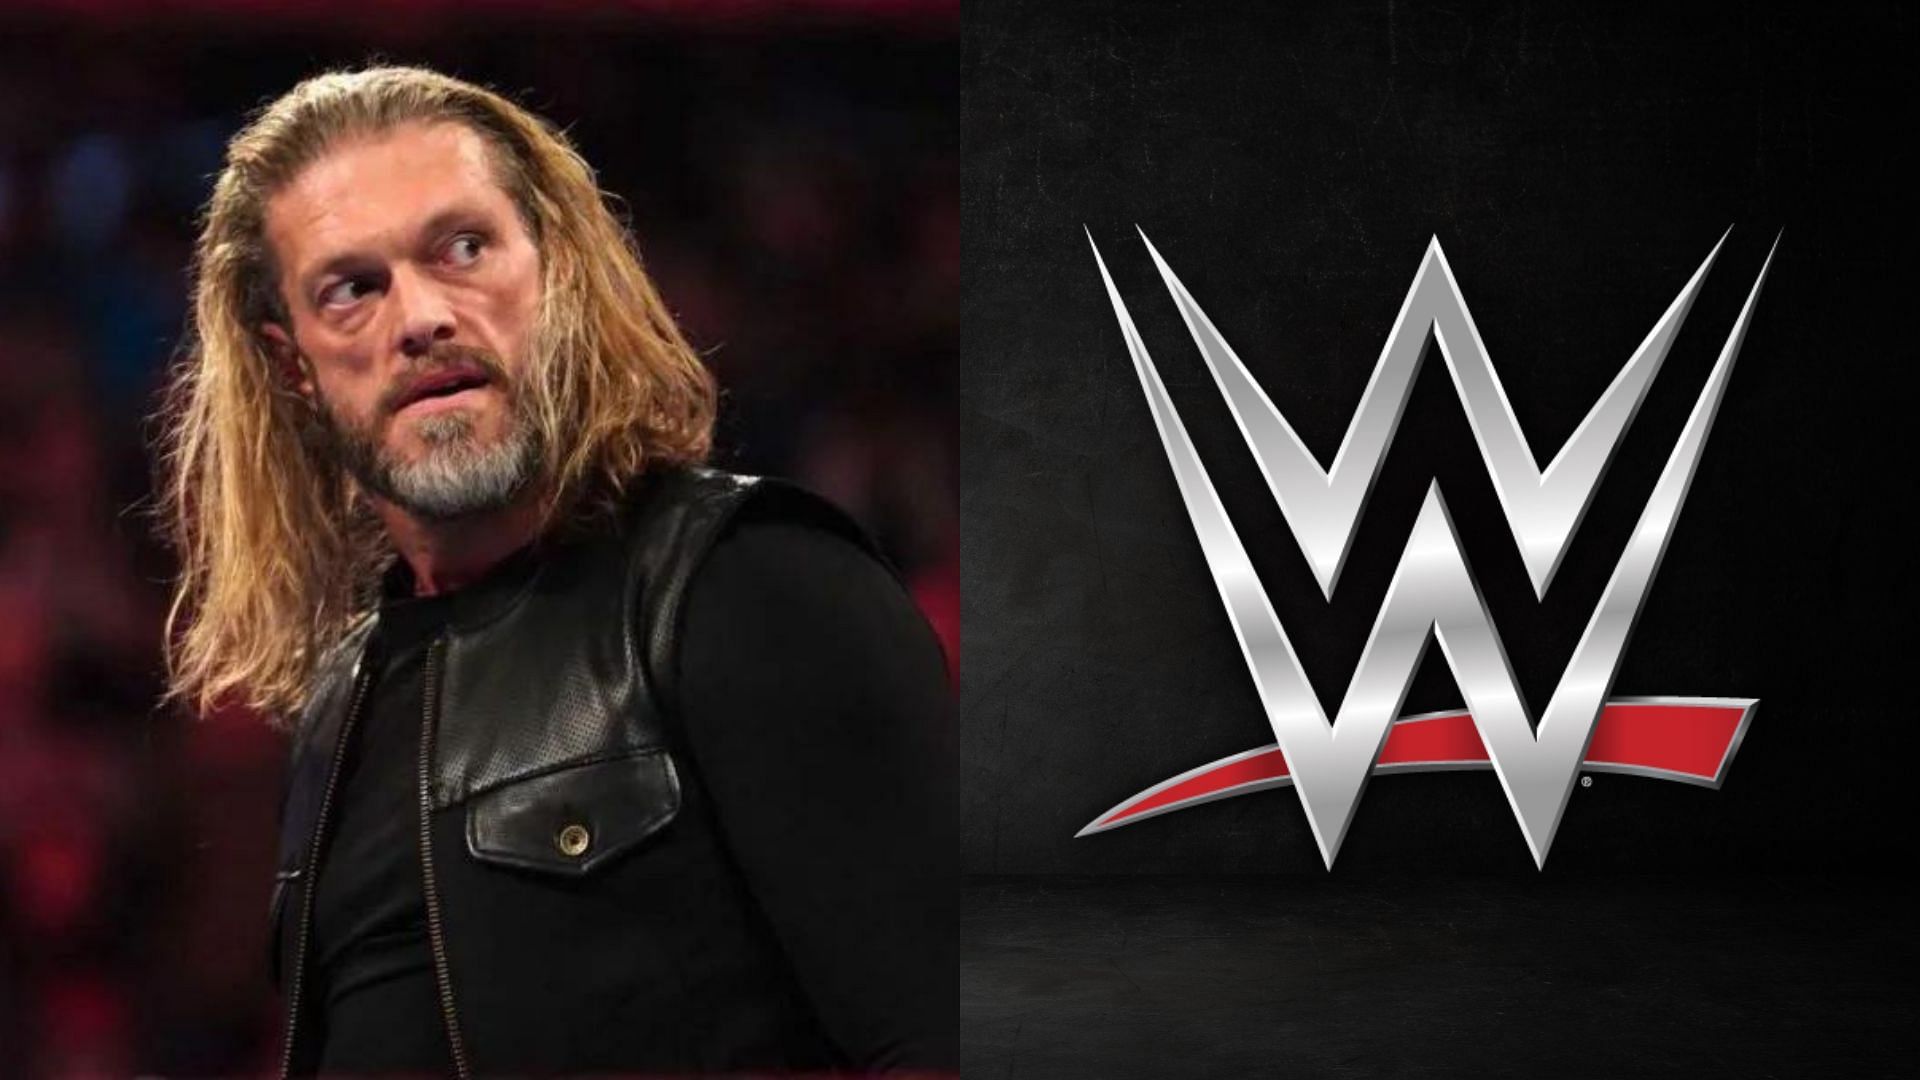 Edge has had an extensive career in WWE